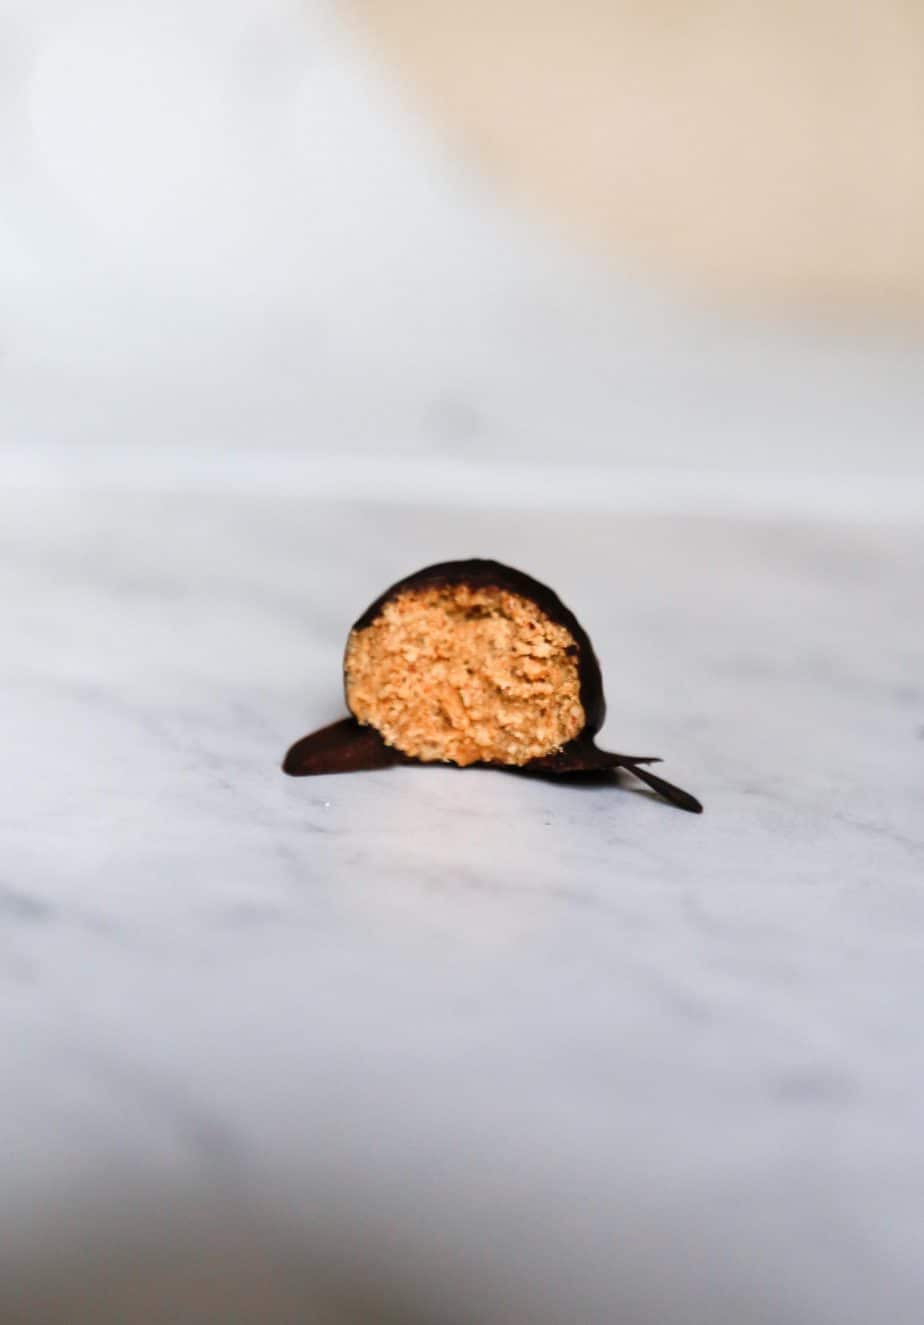 a vegan chocolate truffle bitten in half to show the inside